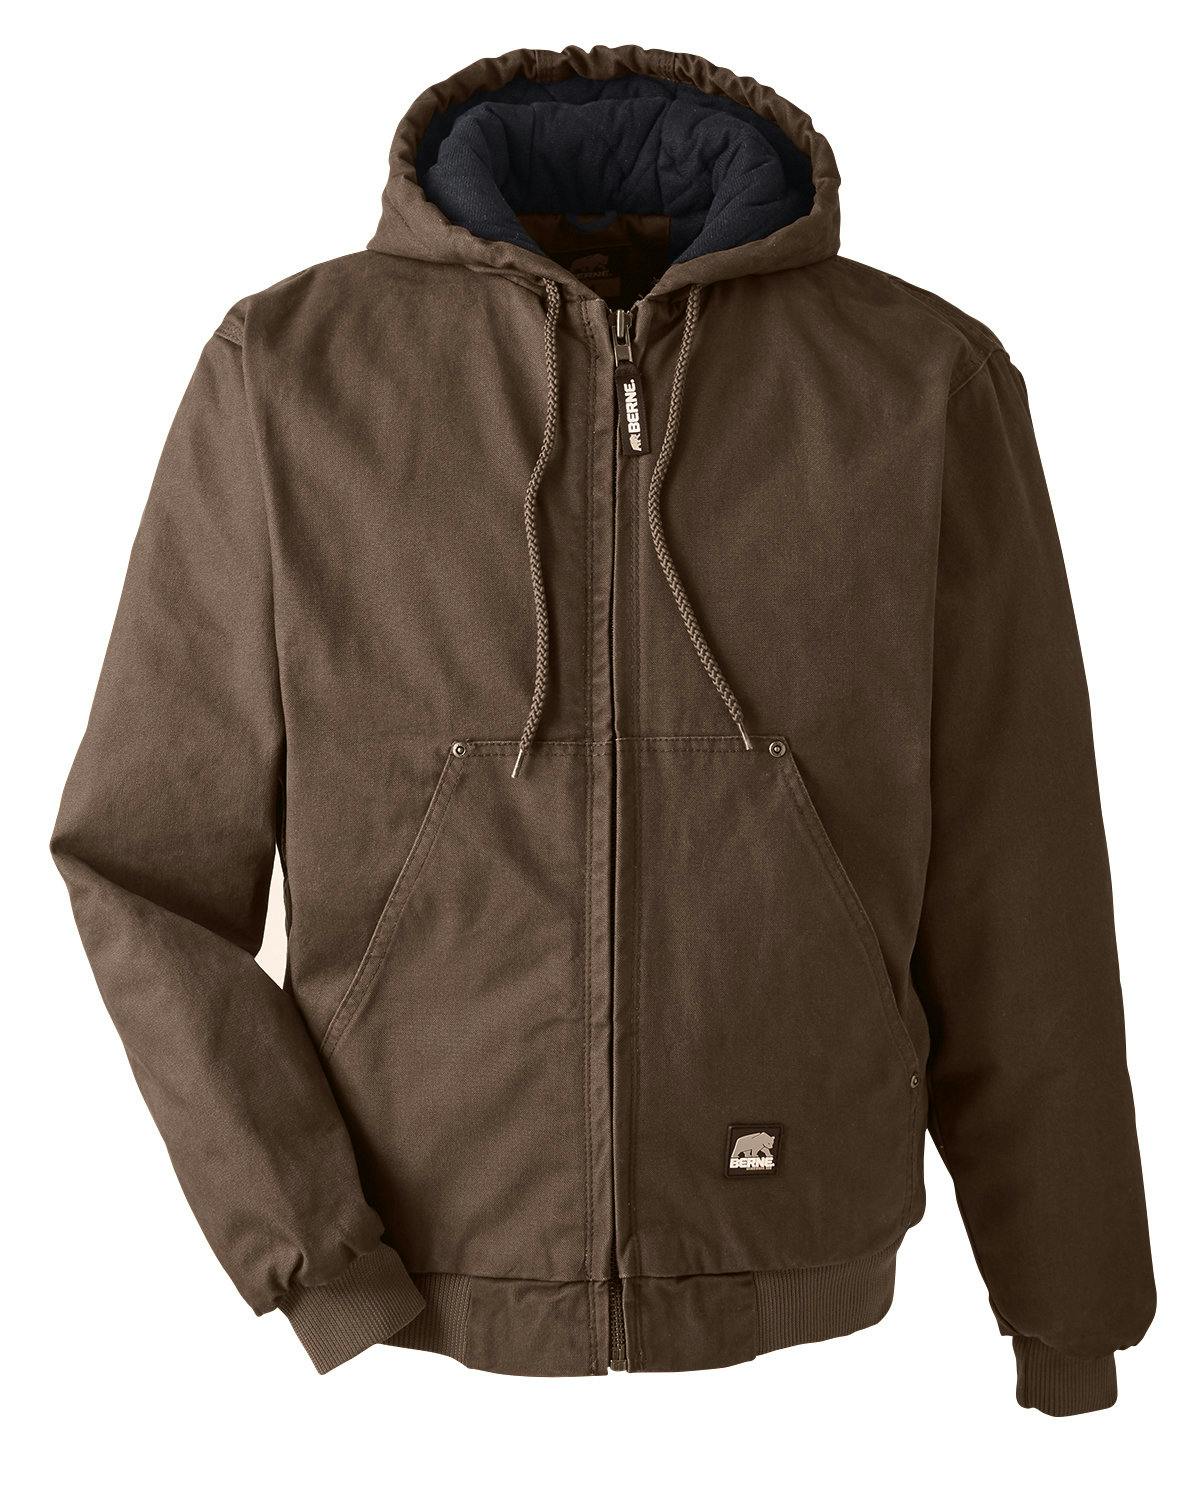 Image for Men's Highland Washed Cotton Duck Hooded Jacket